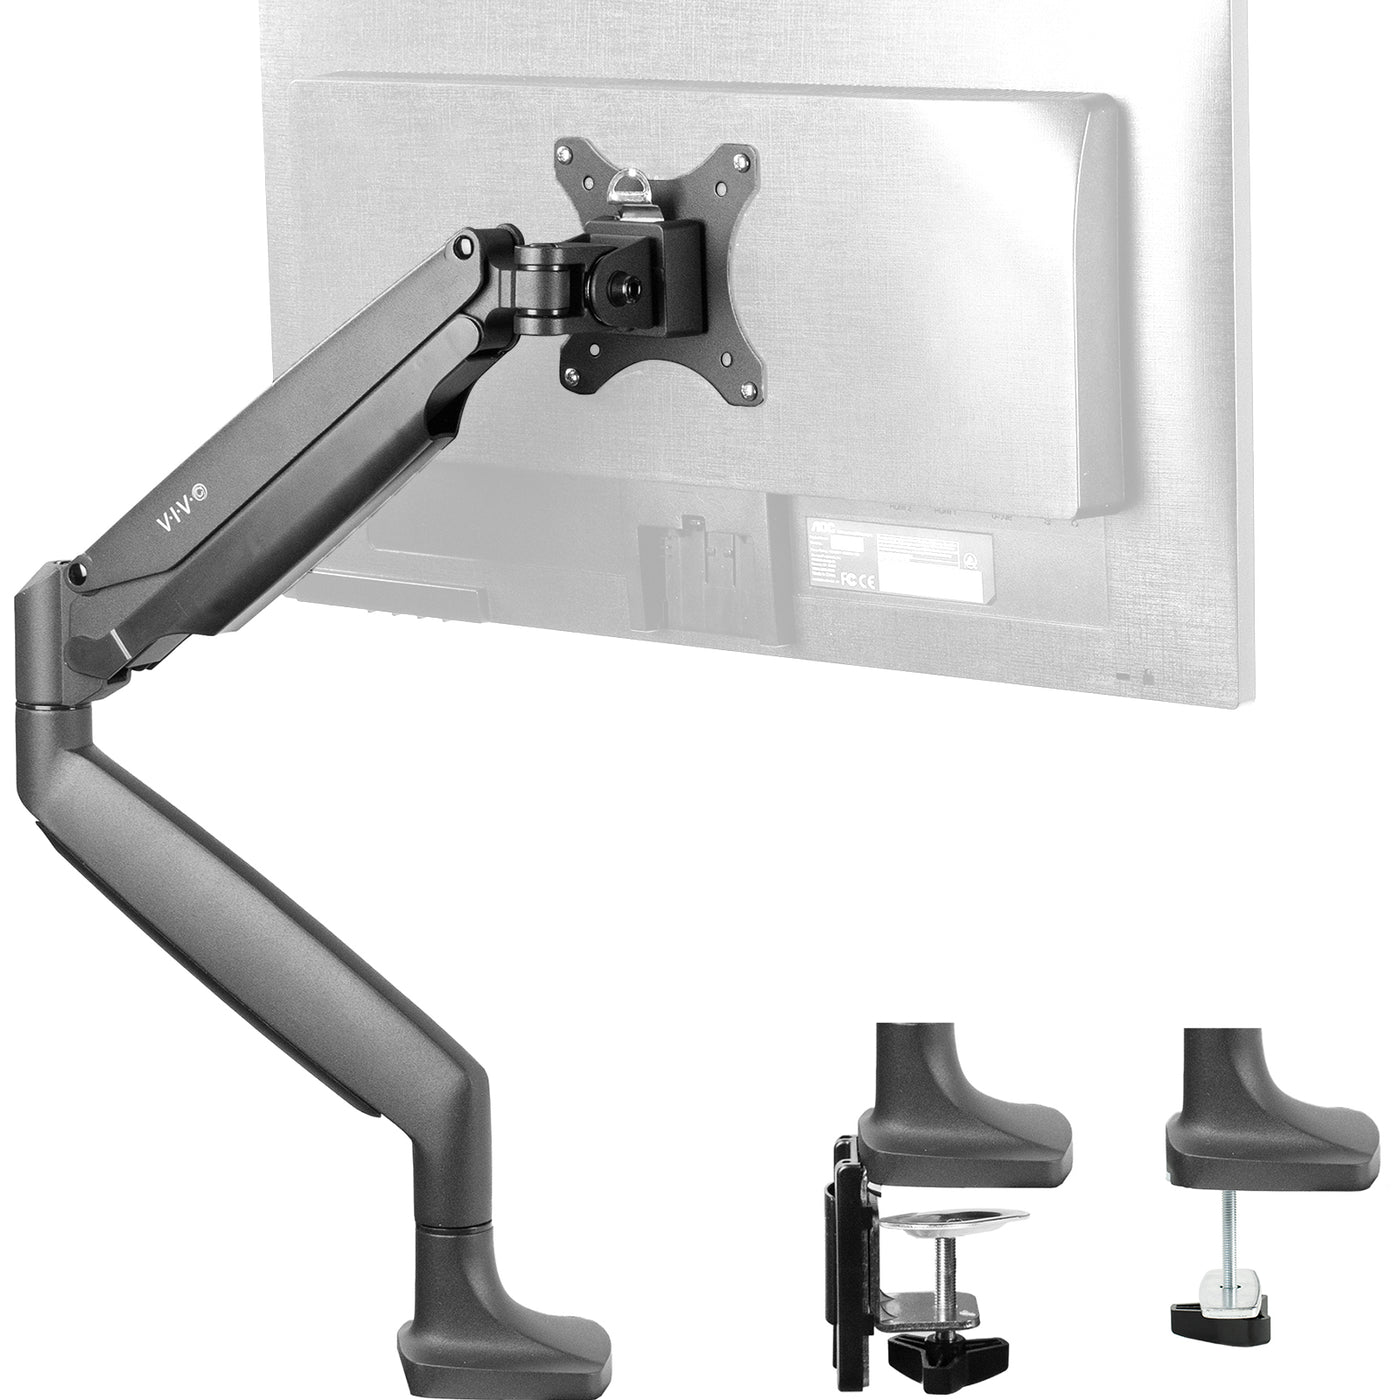 Pneumatic Arm Adjustable Single Monitor Desk Mount